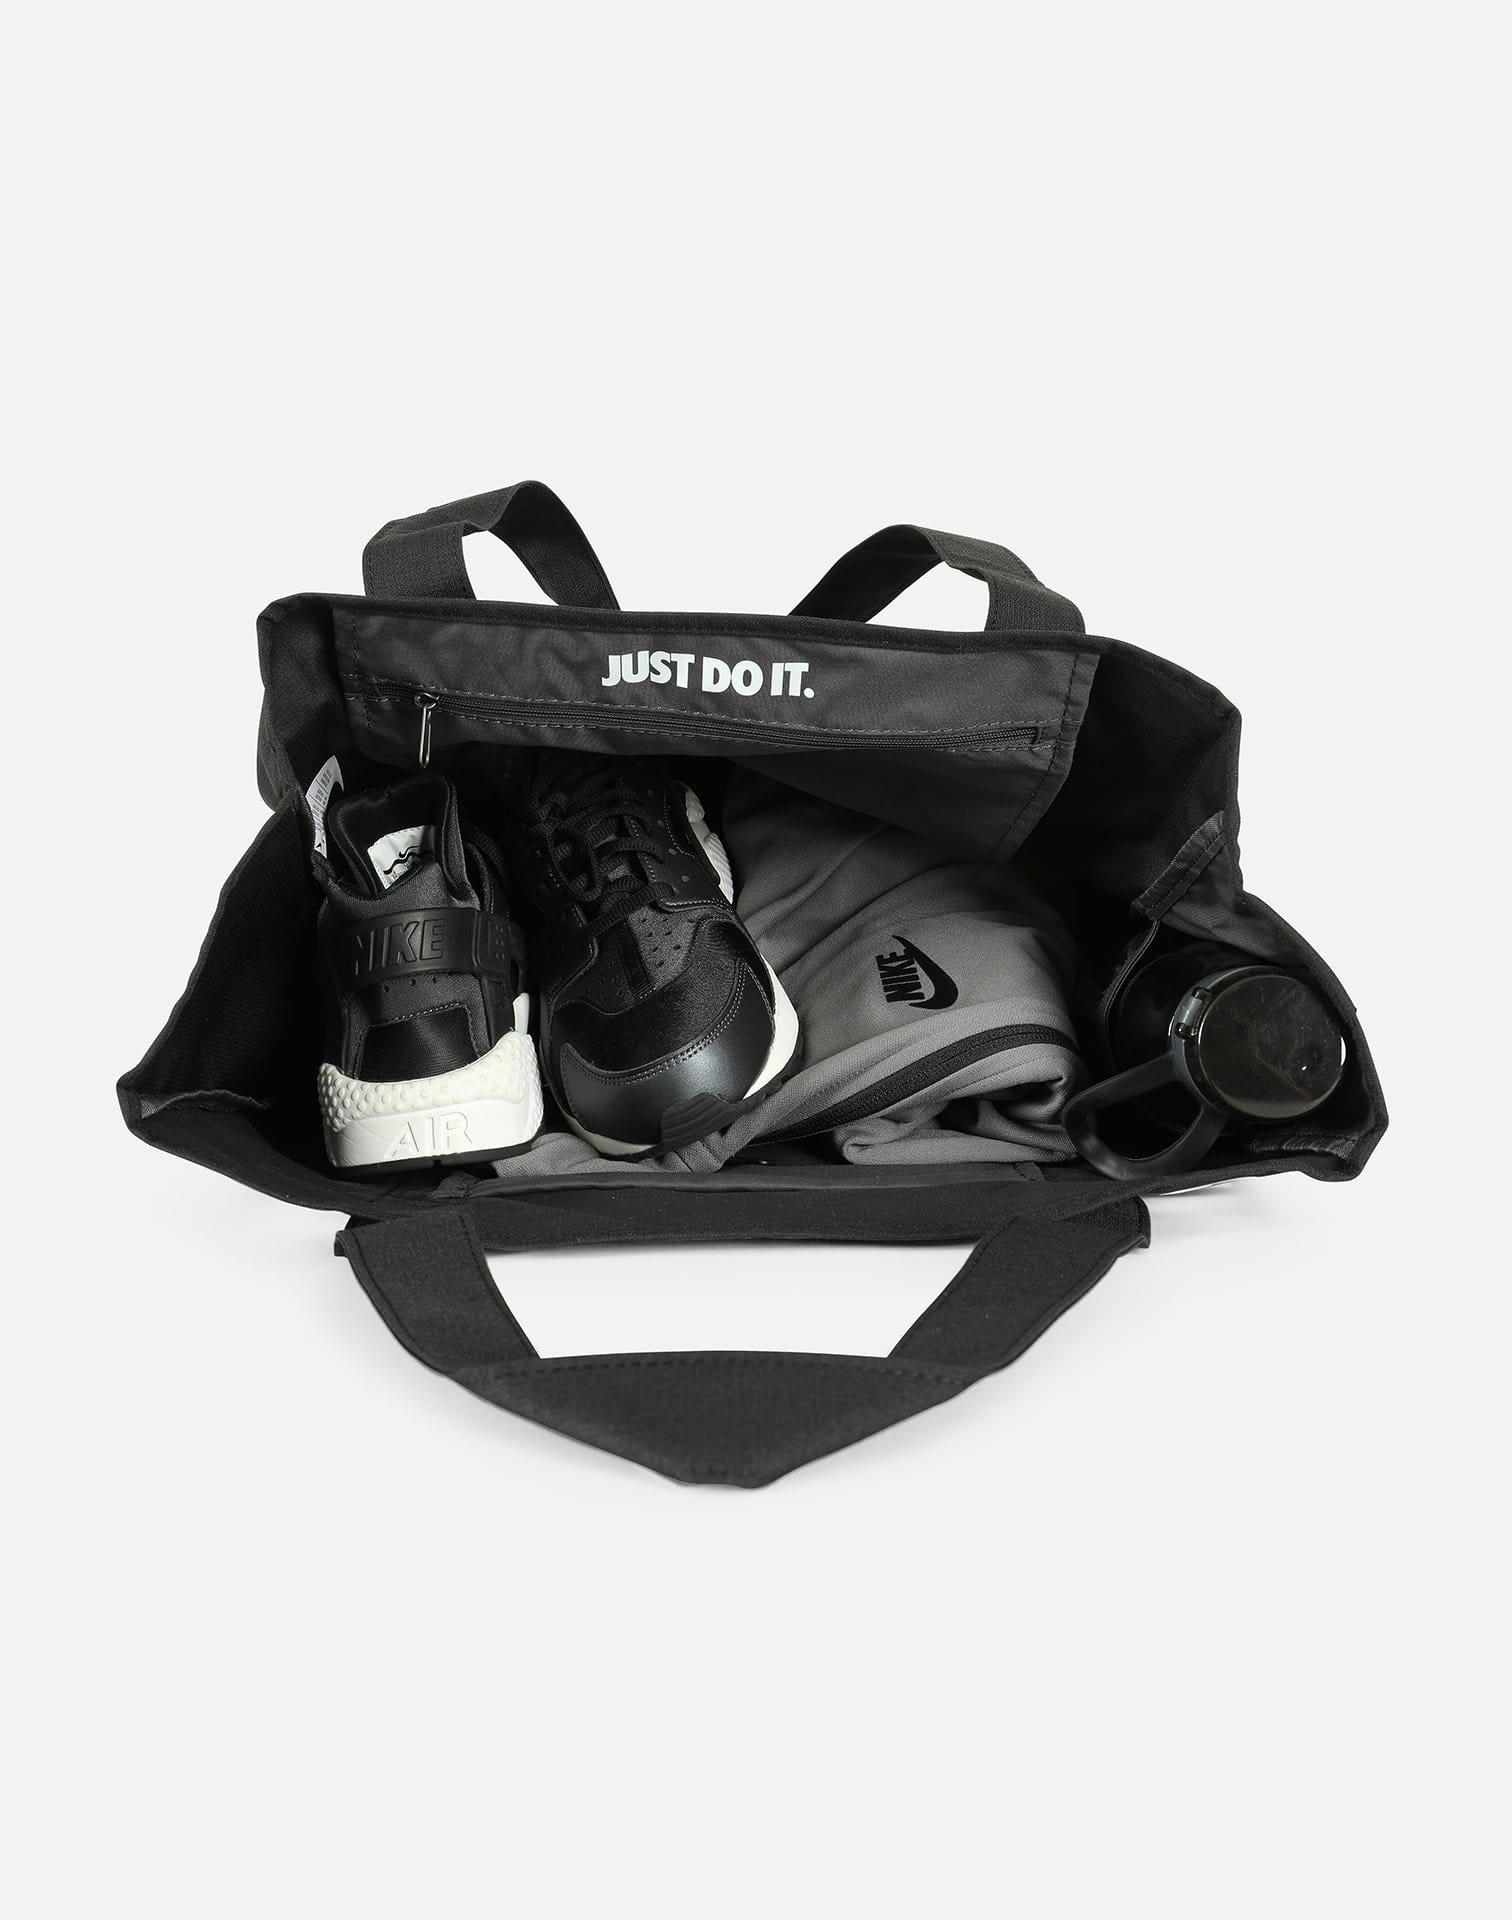 Nike Black Victory Gym Tote Bag New - beyond exchange